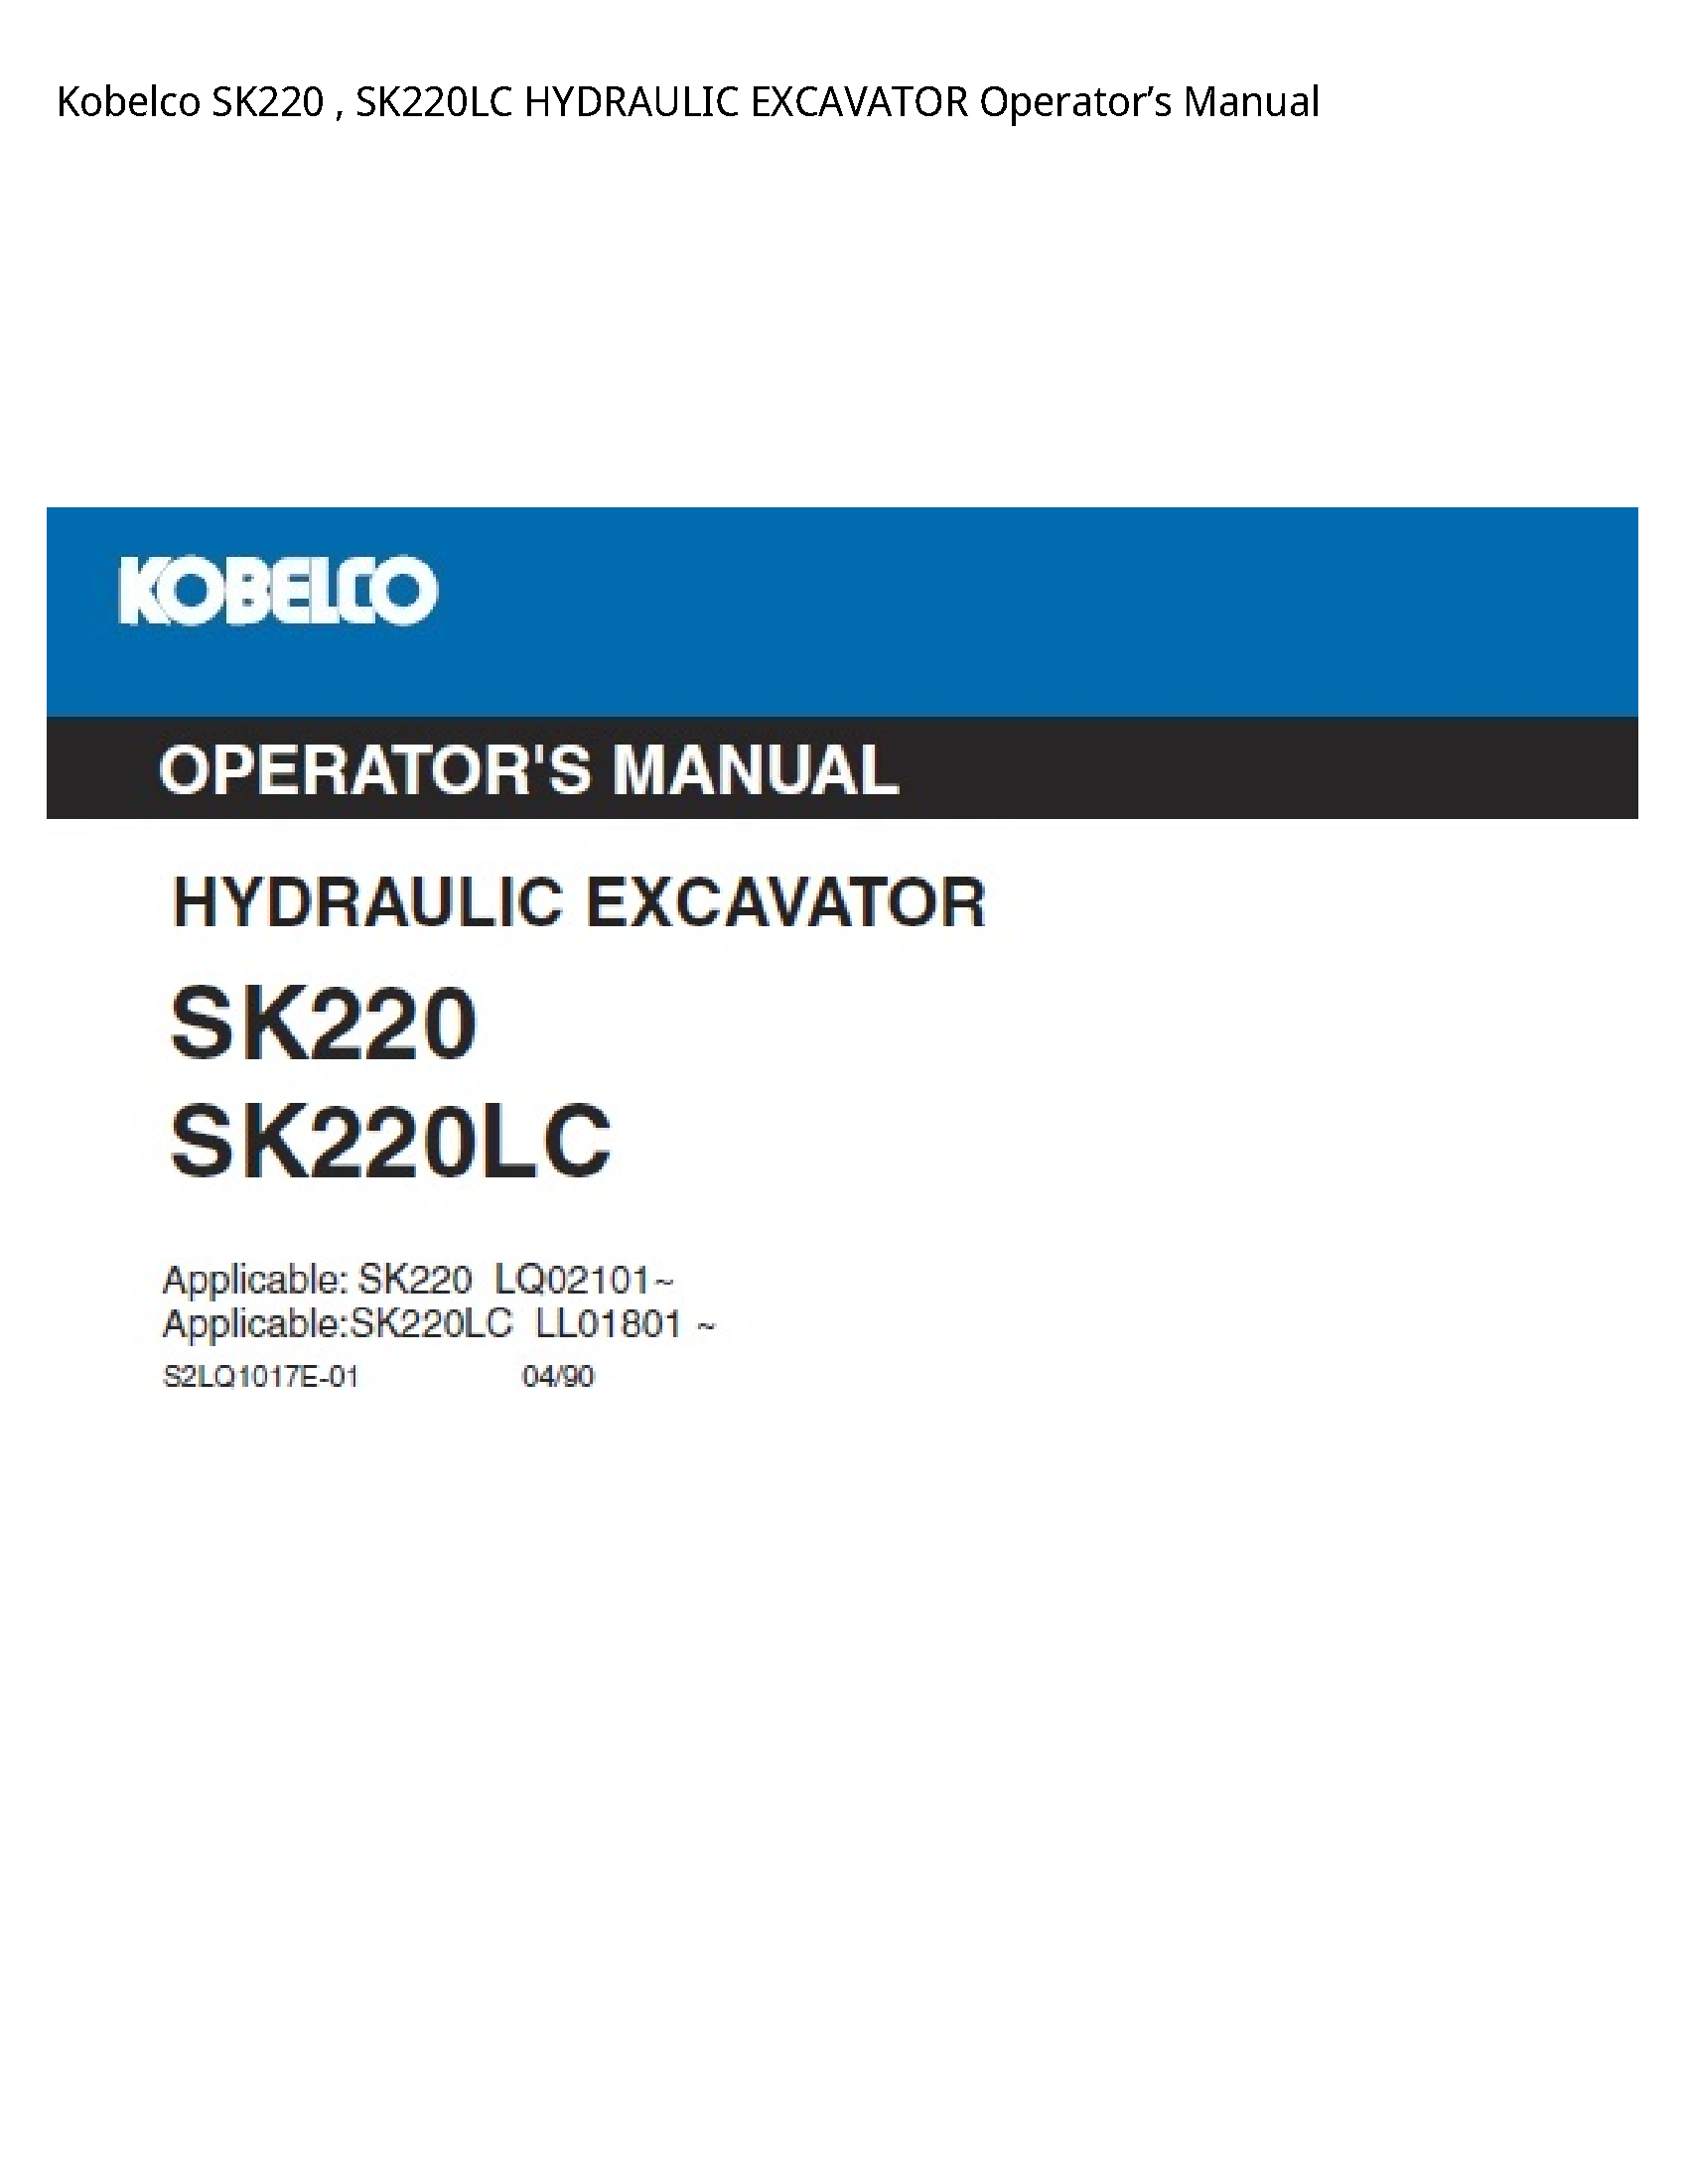 Kobelco SK220 HYDRAULIC EXCAVATOR Operator’s manual